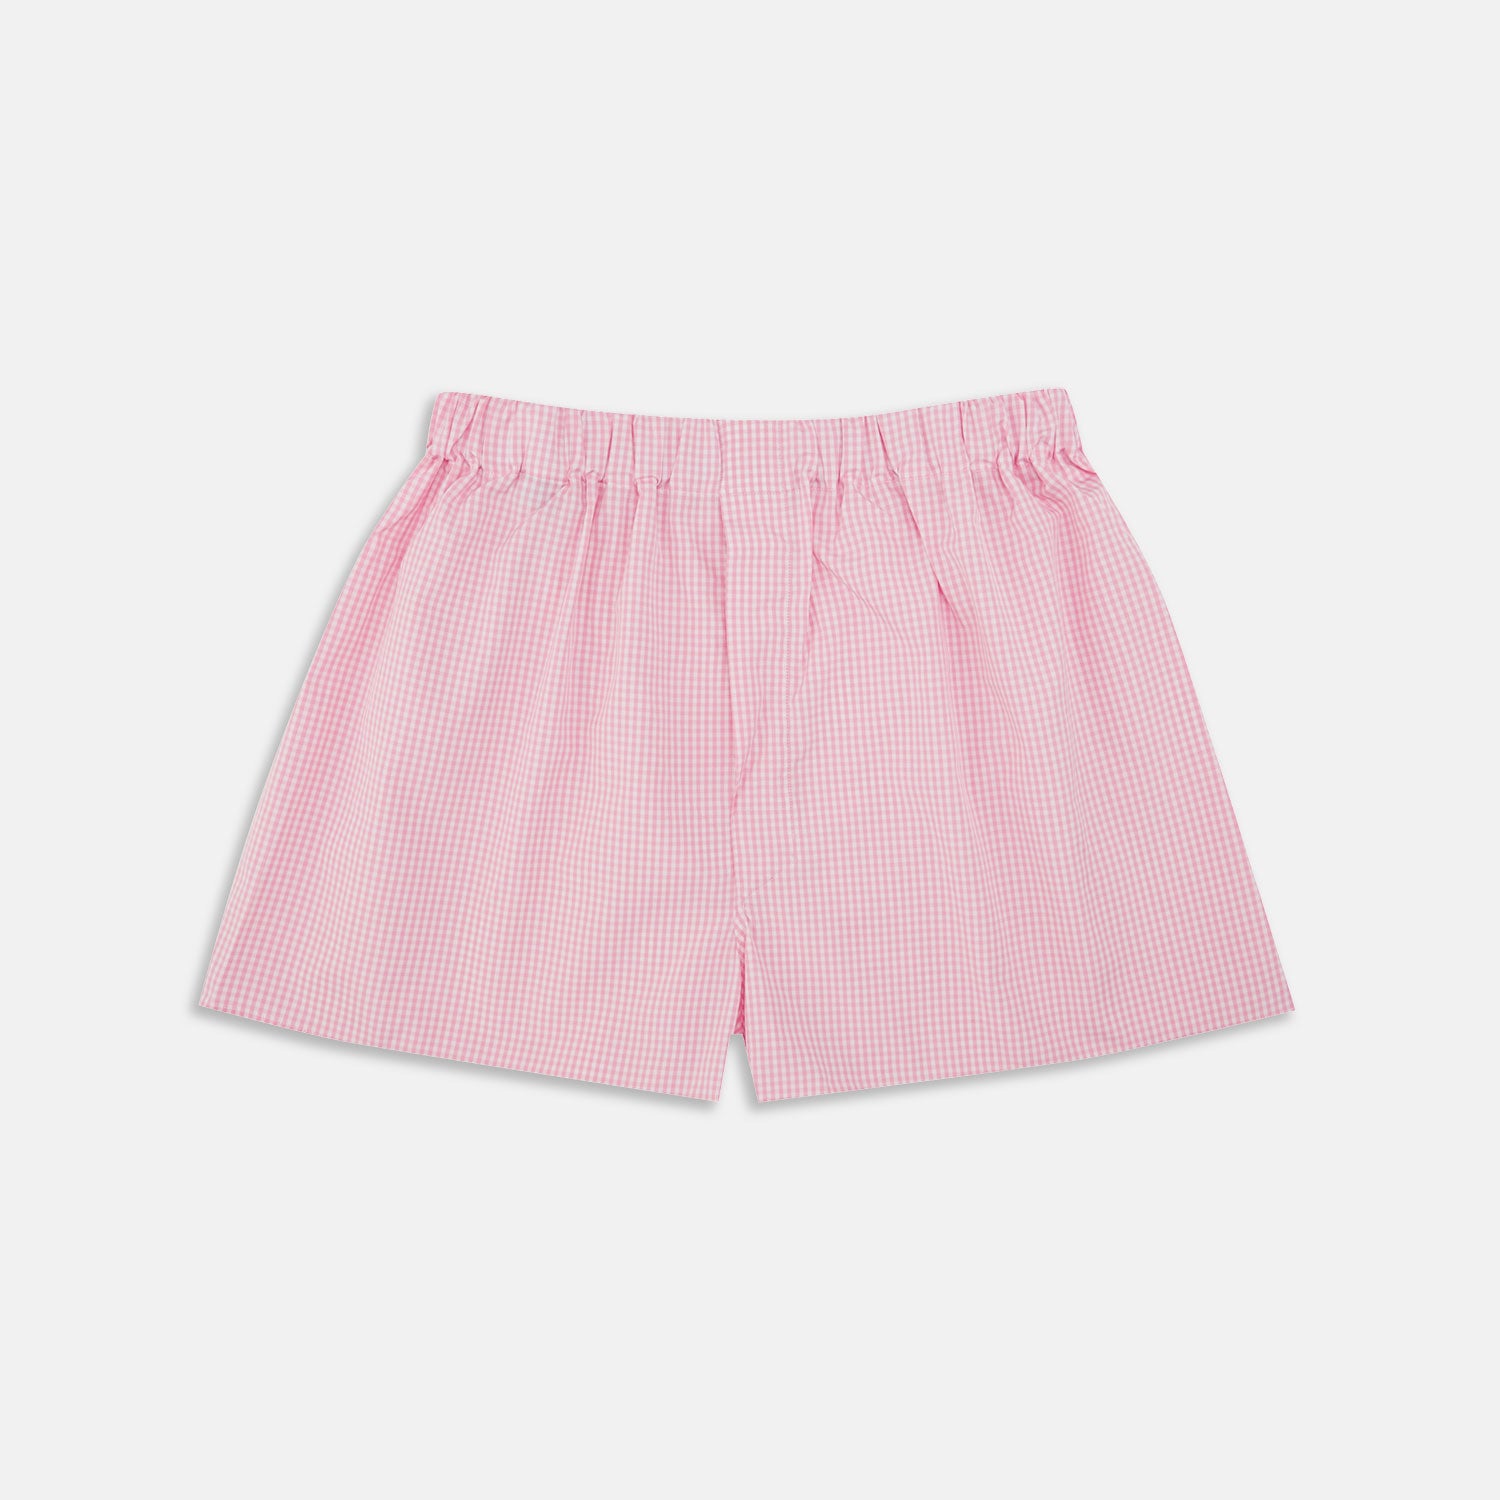 Women's Bright Pink DIM Originals modal cotton boxer shorts